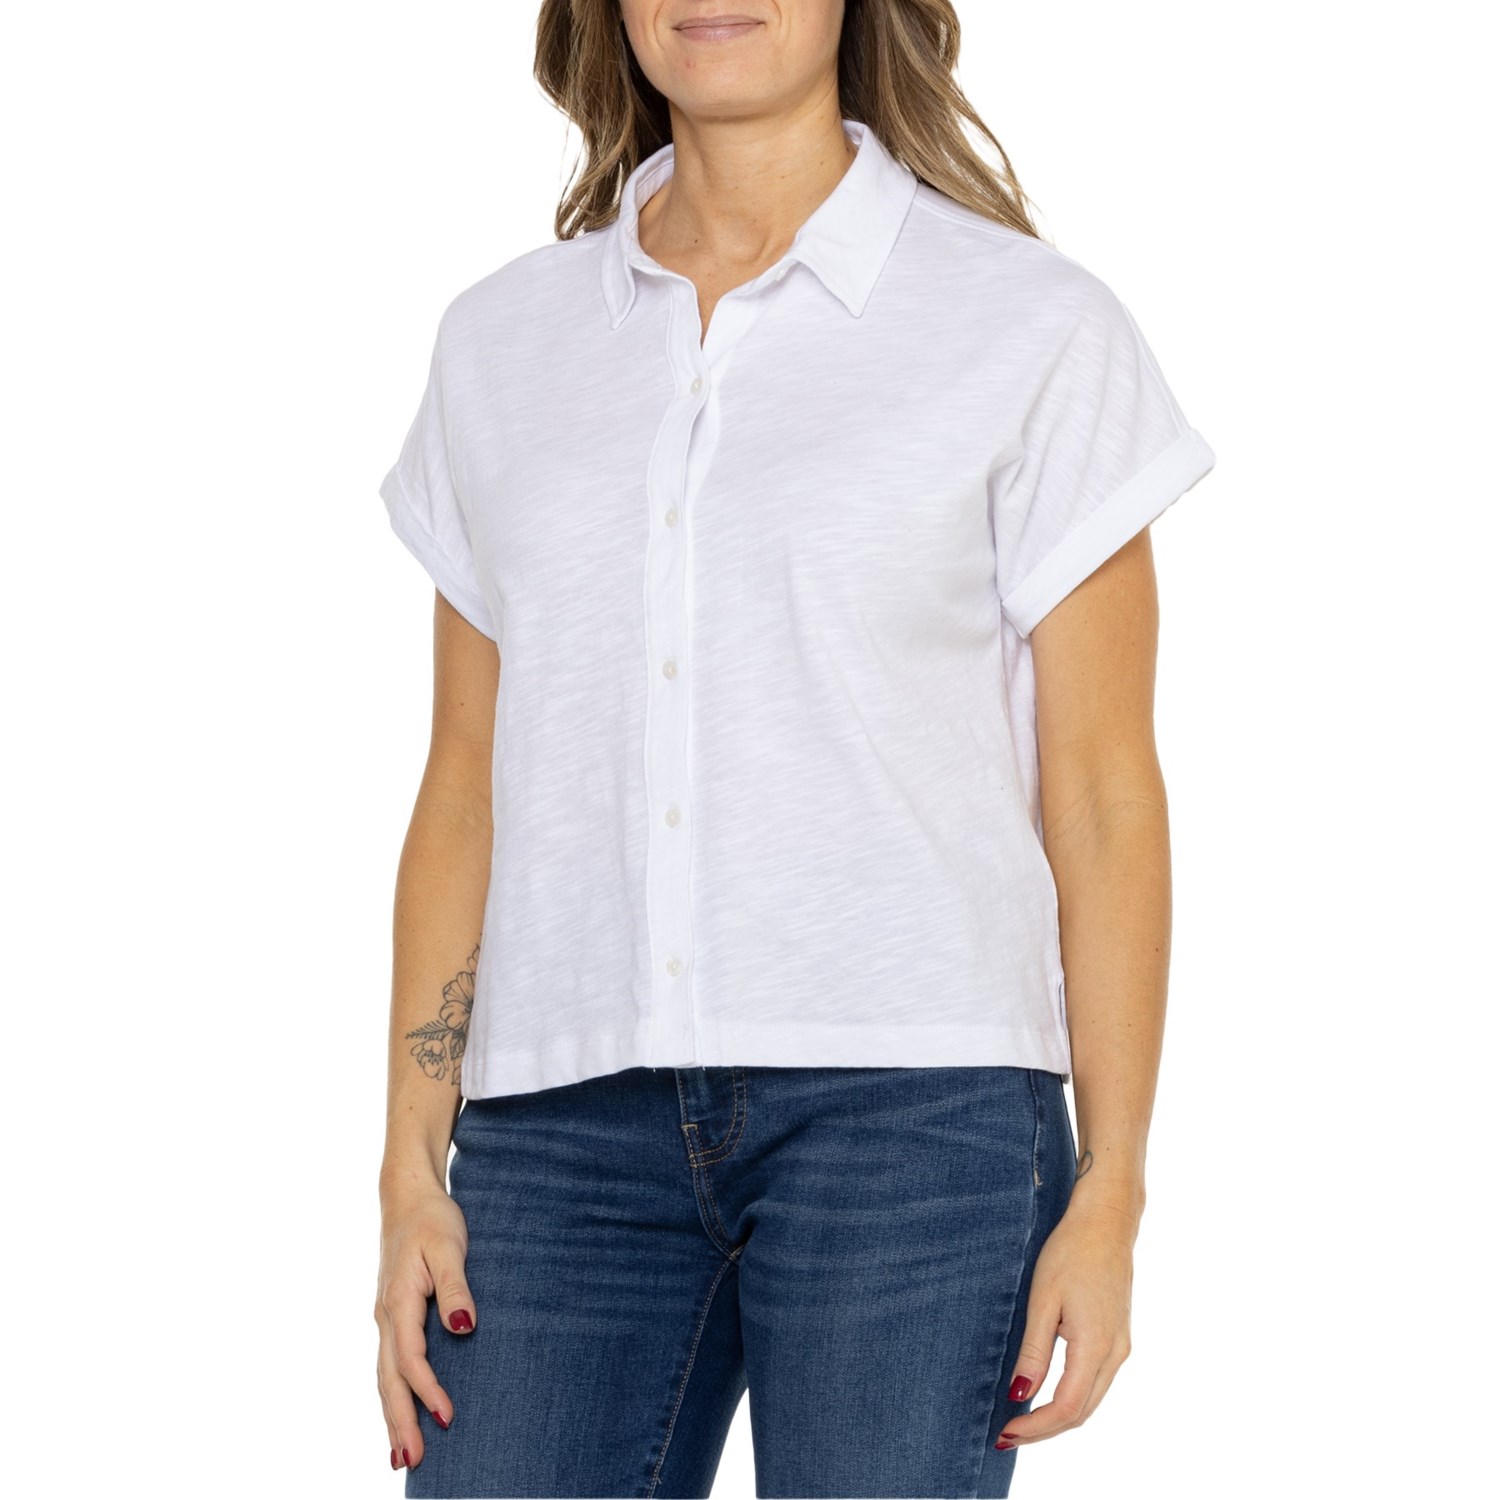 () eChN[WOJpj[ {^Abv h} Vc - V[g X[u Telluride Clothing Company Button-Up Dolman Shirt - Short Sleeve Brilliant White